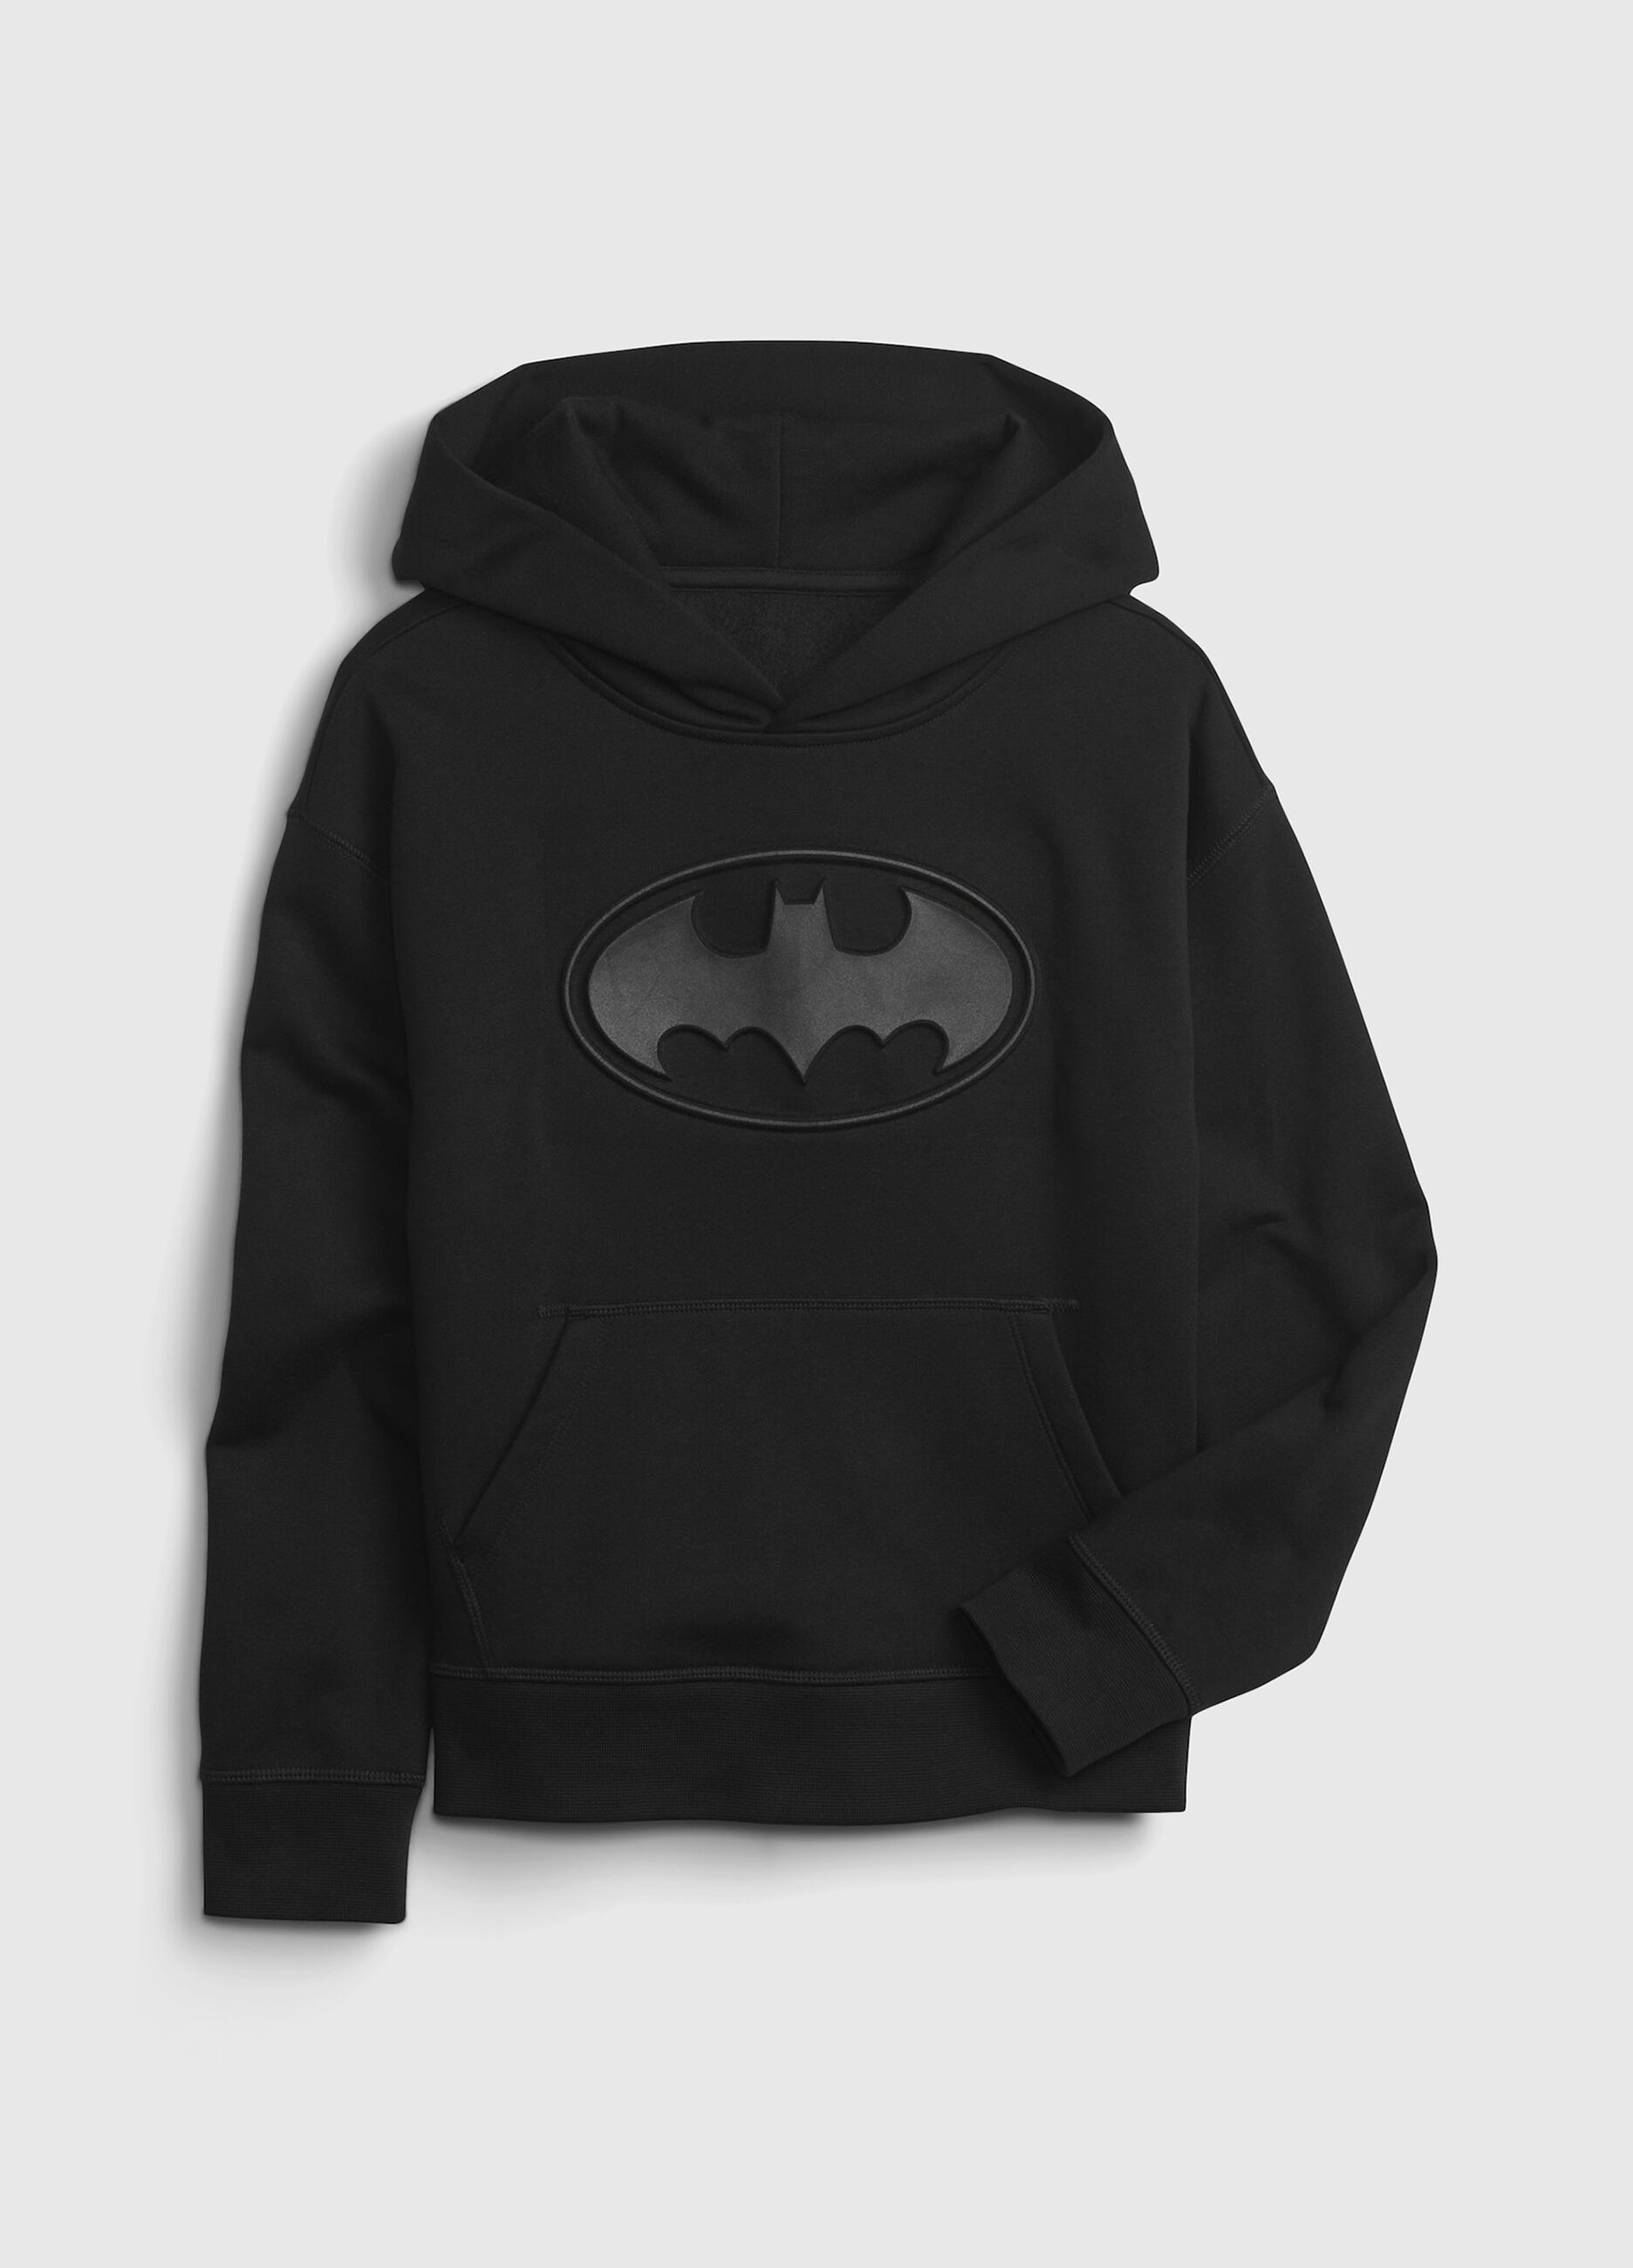 Oversize hoodie with Batman logo